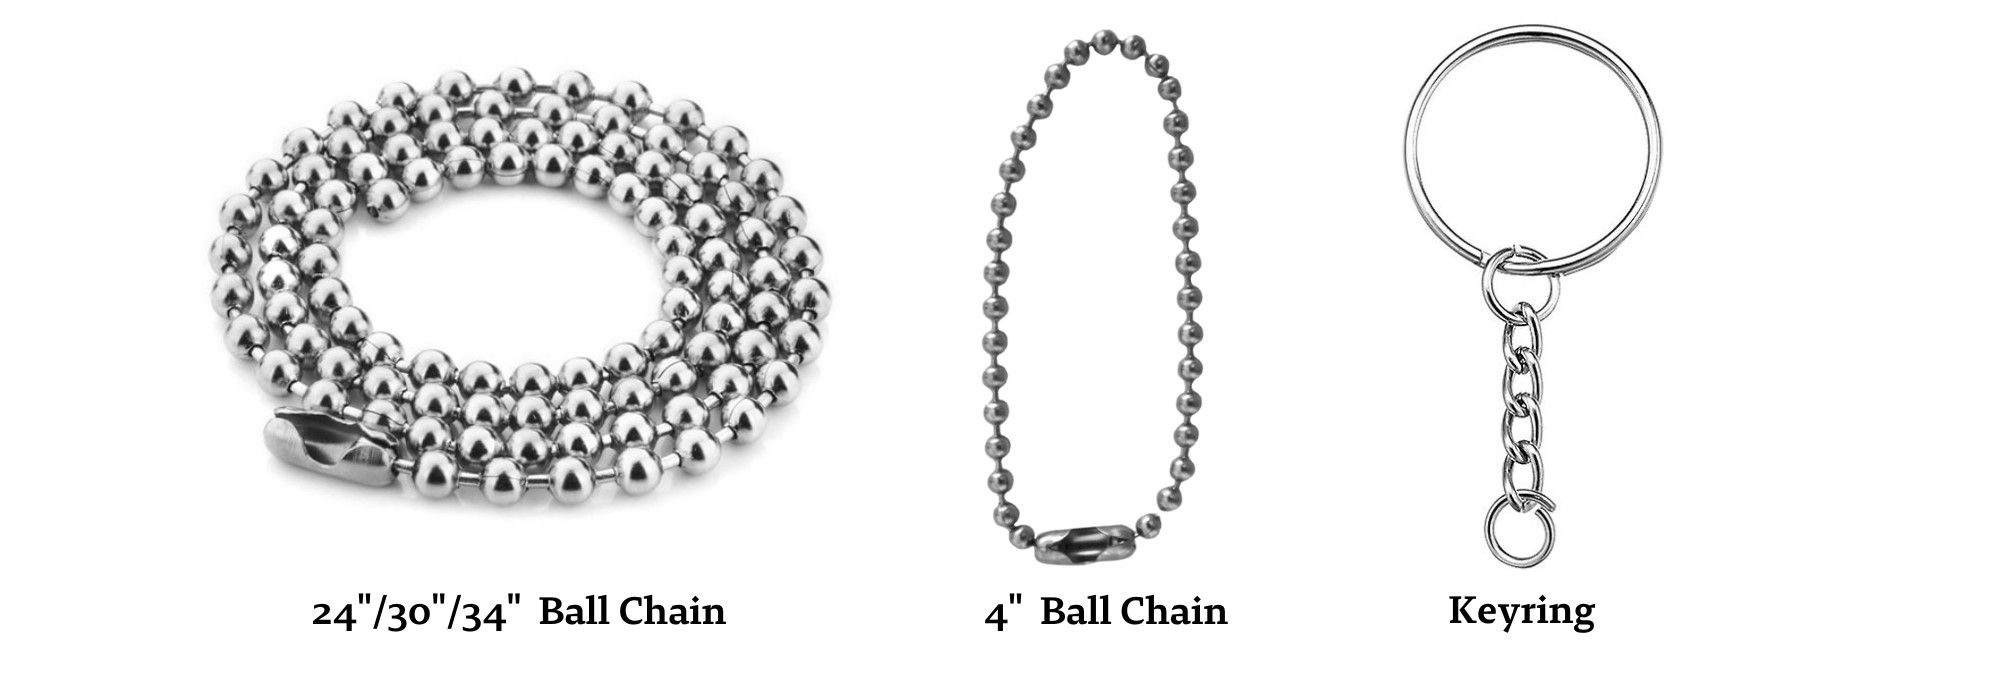 Le collier de chaîne de chien en silicone.